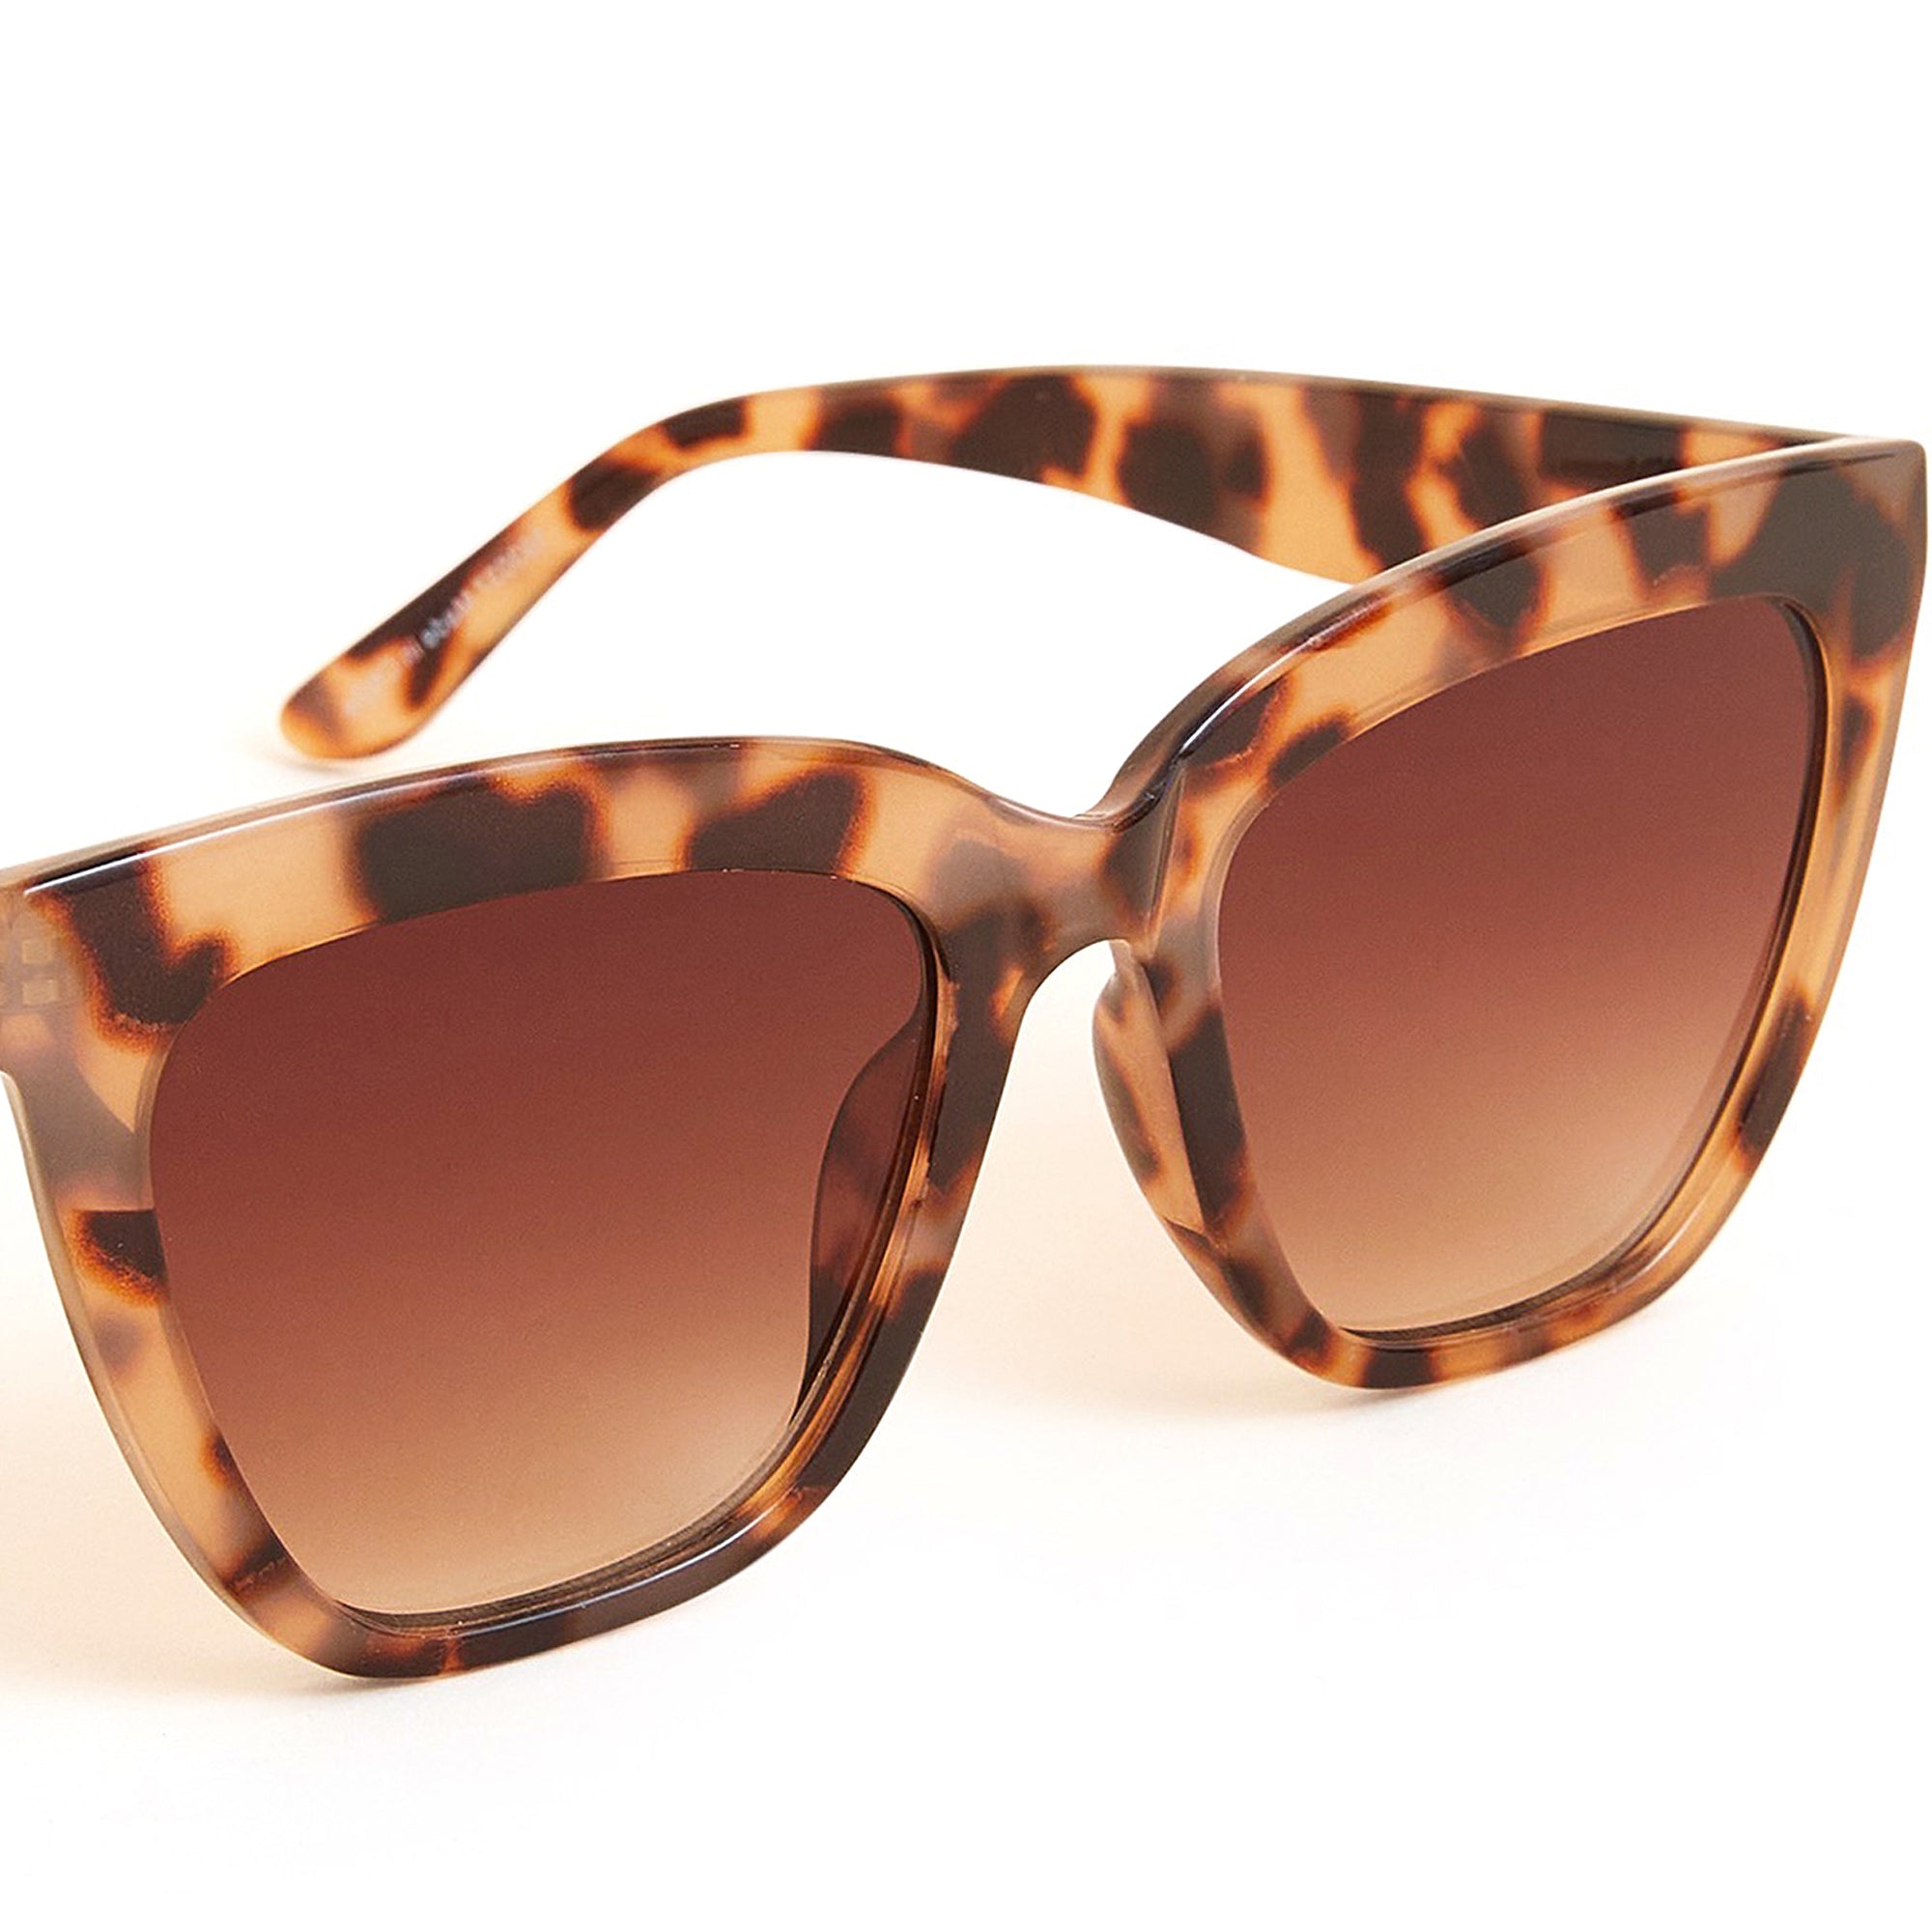 Accessorize London Women's Brown Chunky Cateye Sunglasses